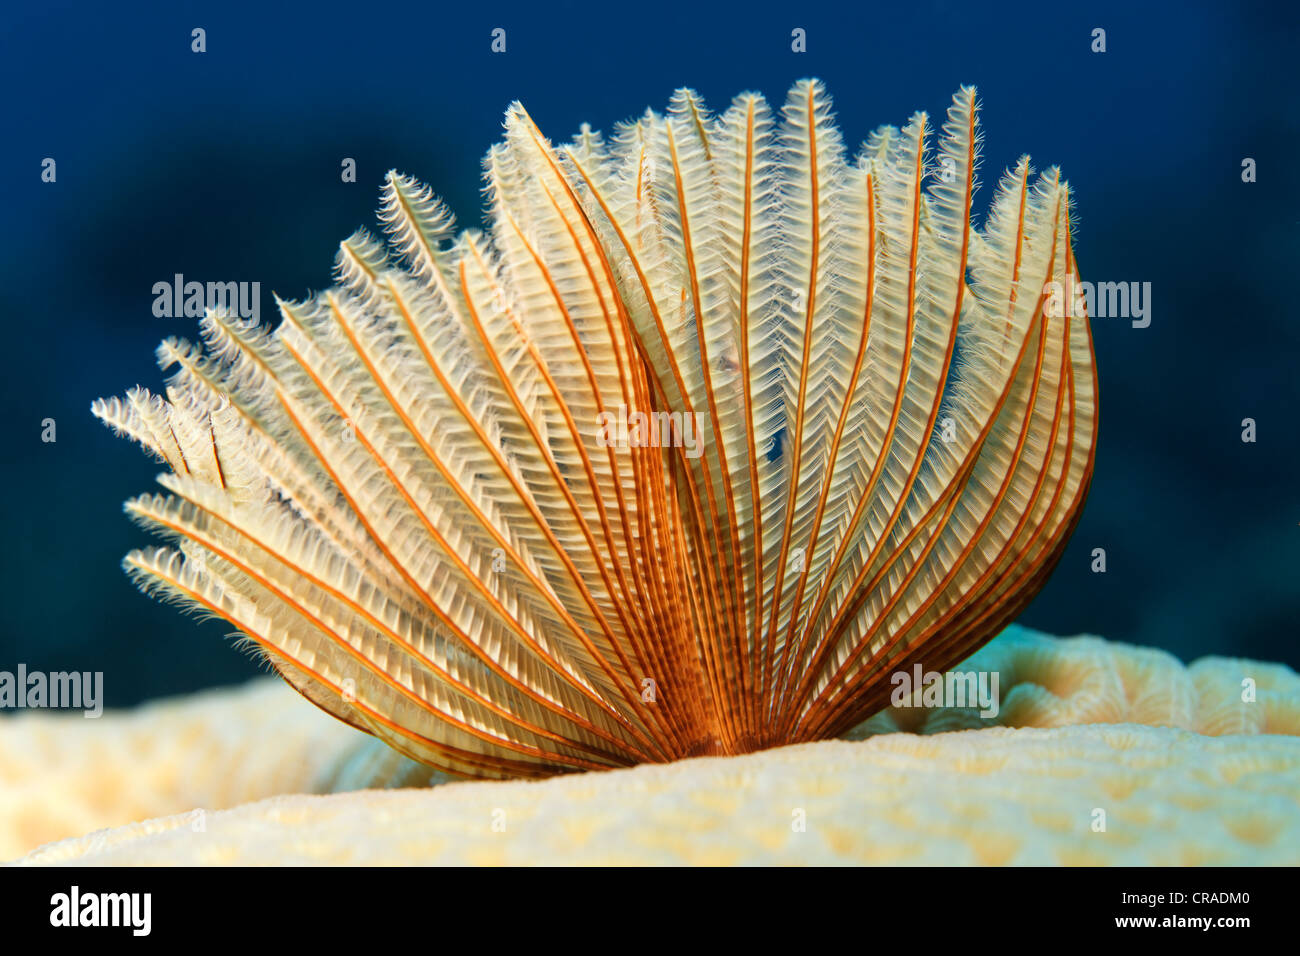 Common Fan Worm (Sabellastarte sp.) on stone coral, Hashemite Kingdom of Jordan, Red Sea, Western Asia Stock Photo